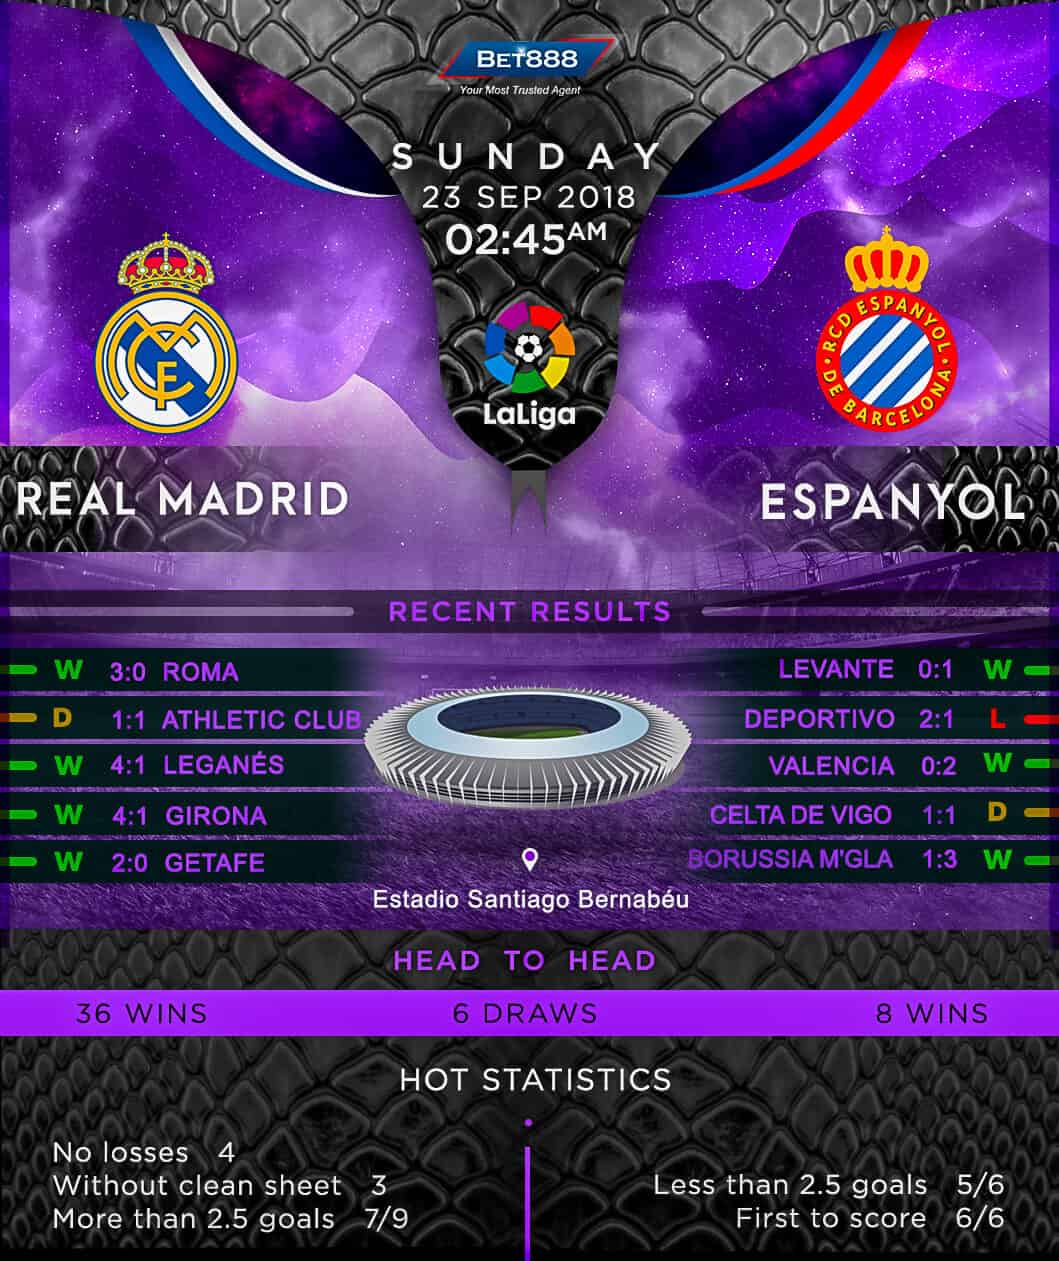 Real Madrid vs Espanyol 23/09/18